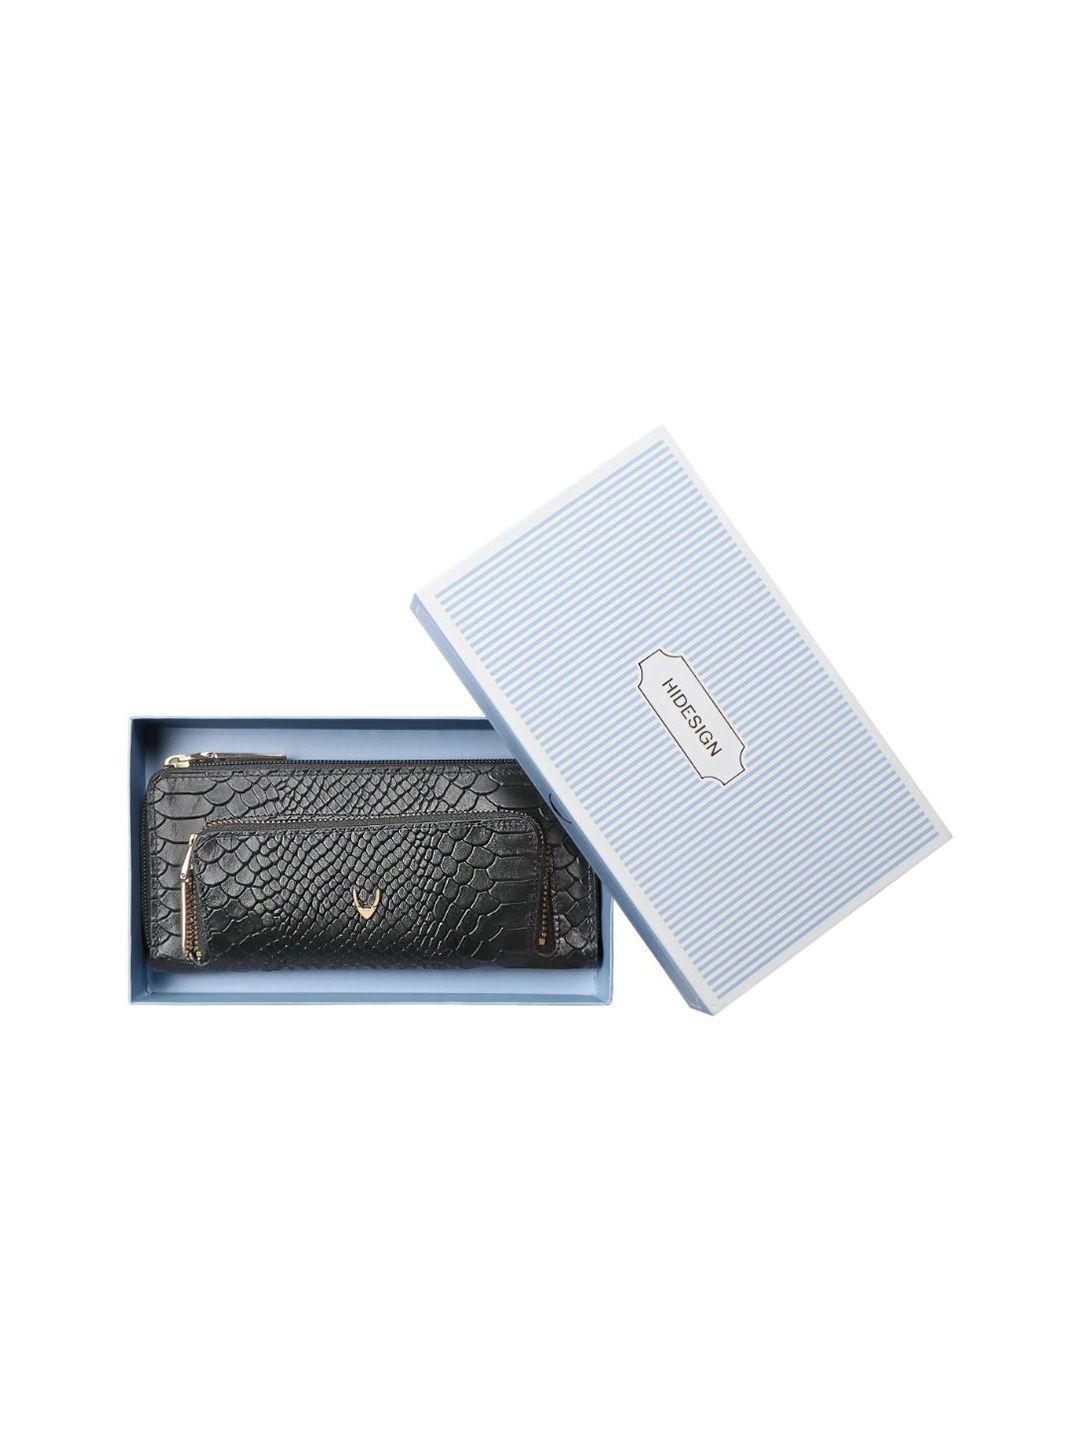 hidesign-animal-textured-zip-around-wallet